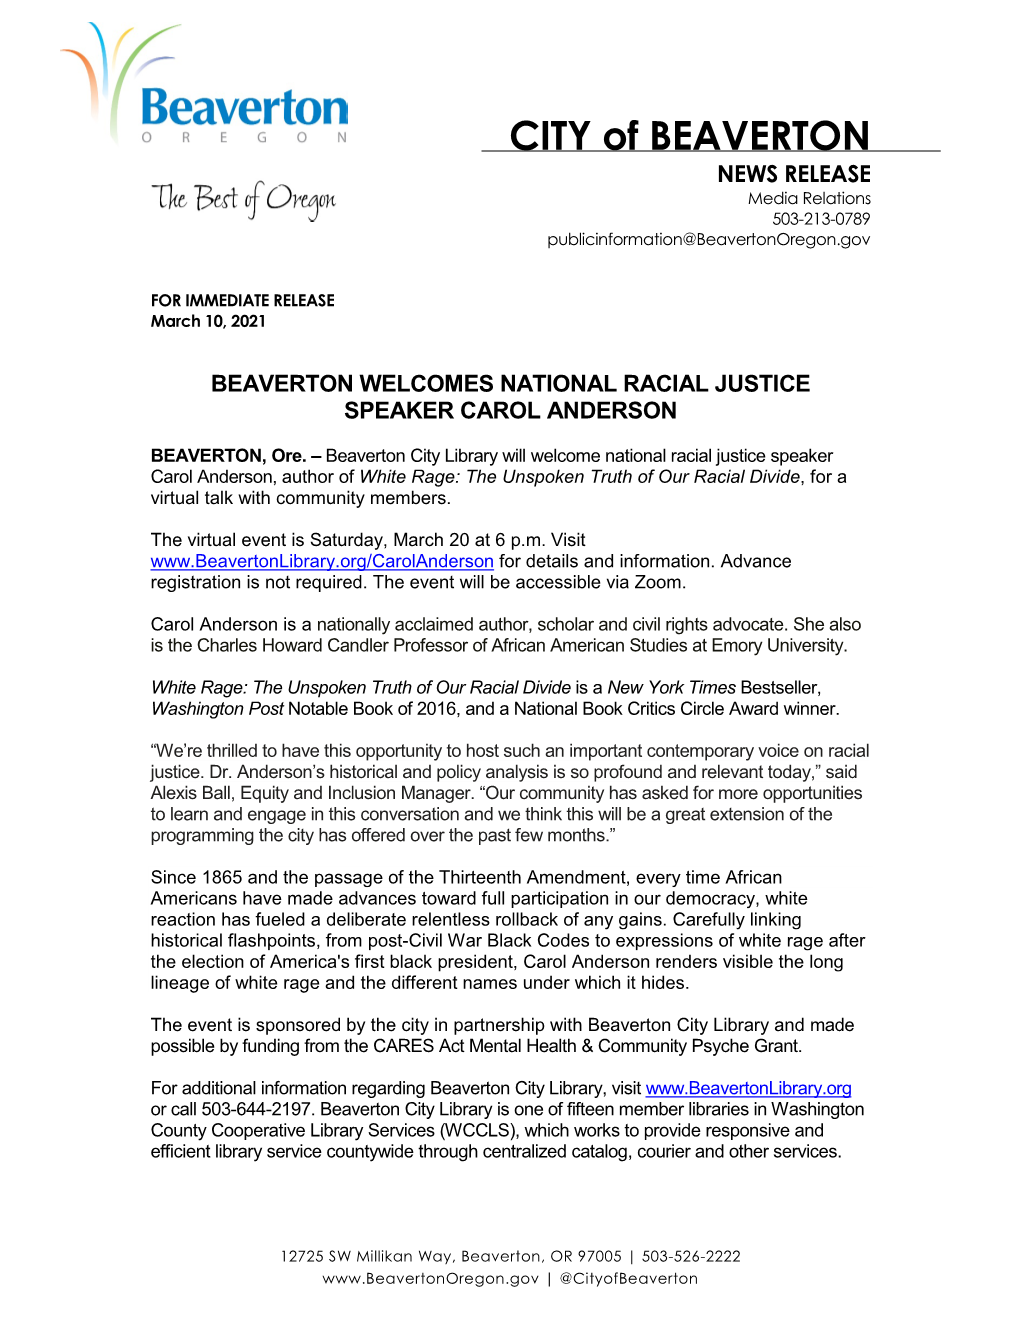 Beaverton Welcomes National Racial Justic Speaker Carol Anderson